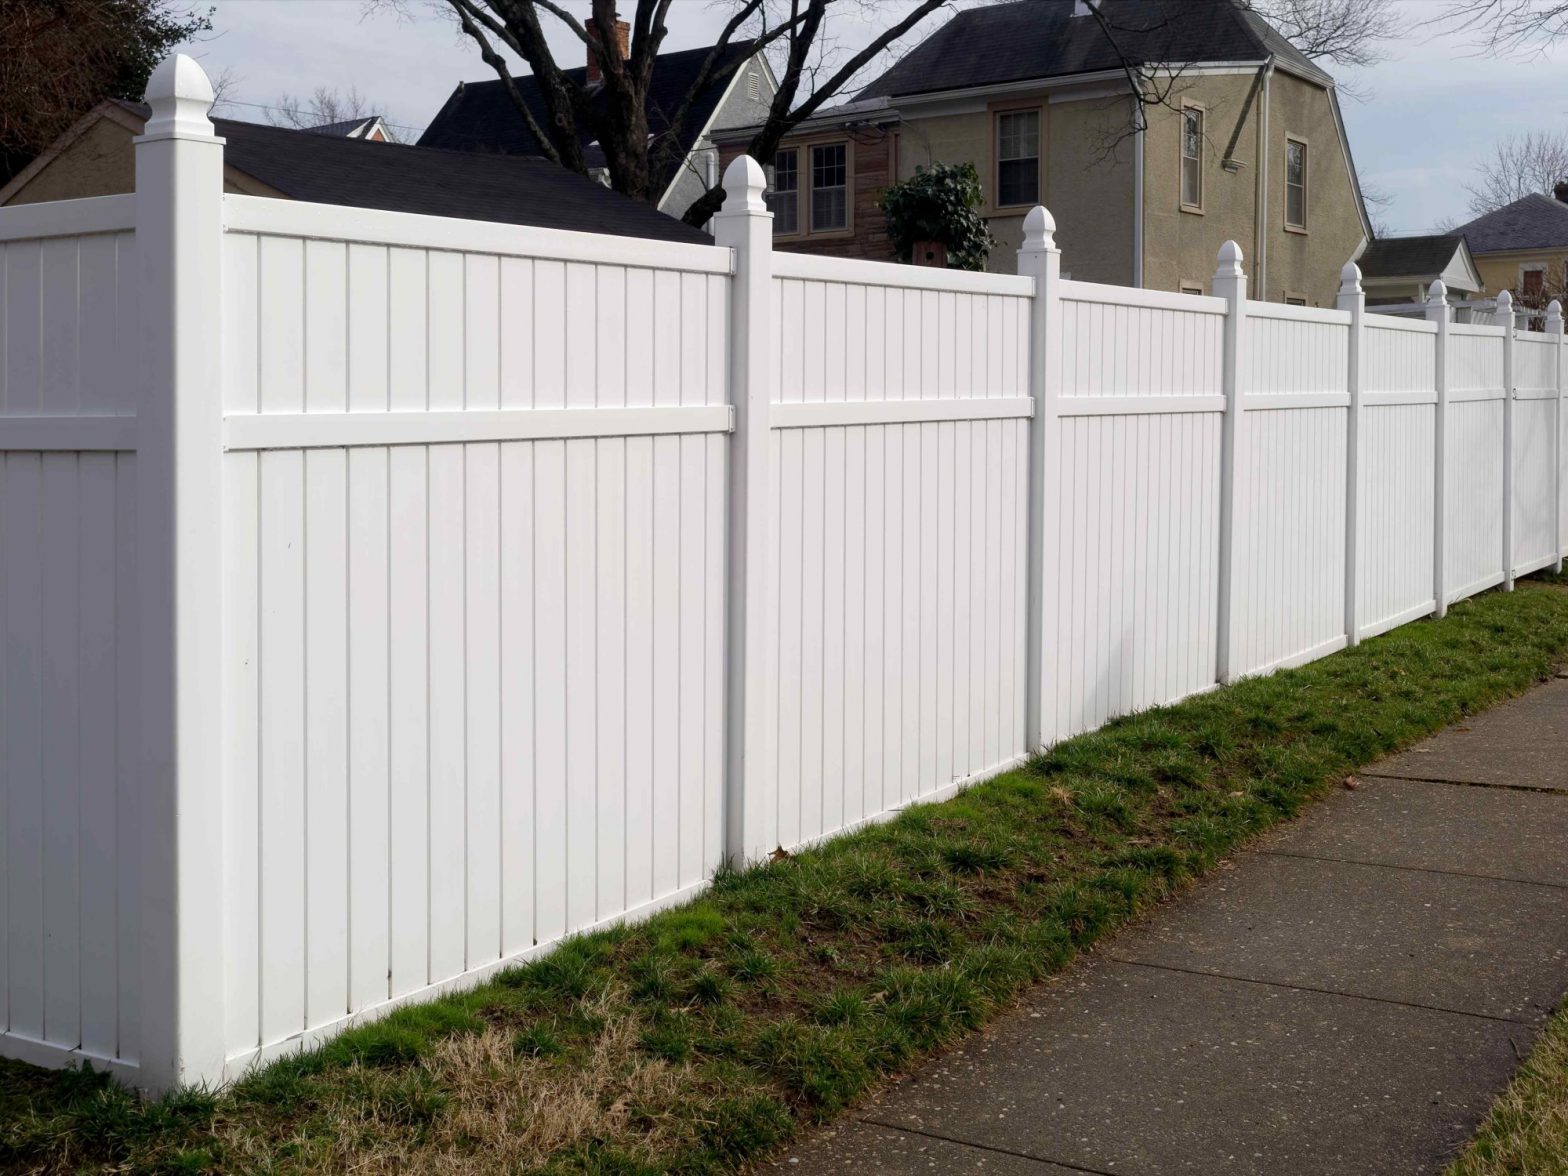 Photo of vinyl fence in Slidell, Louisiana